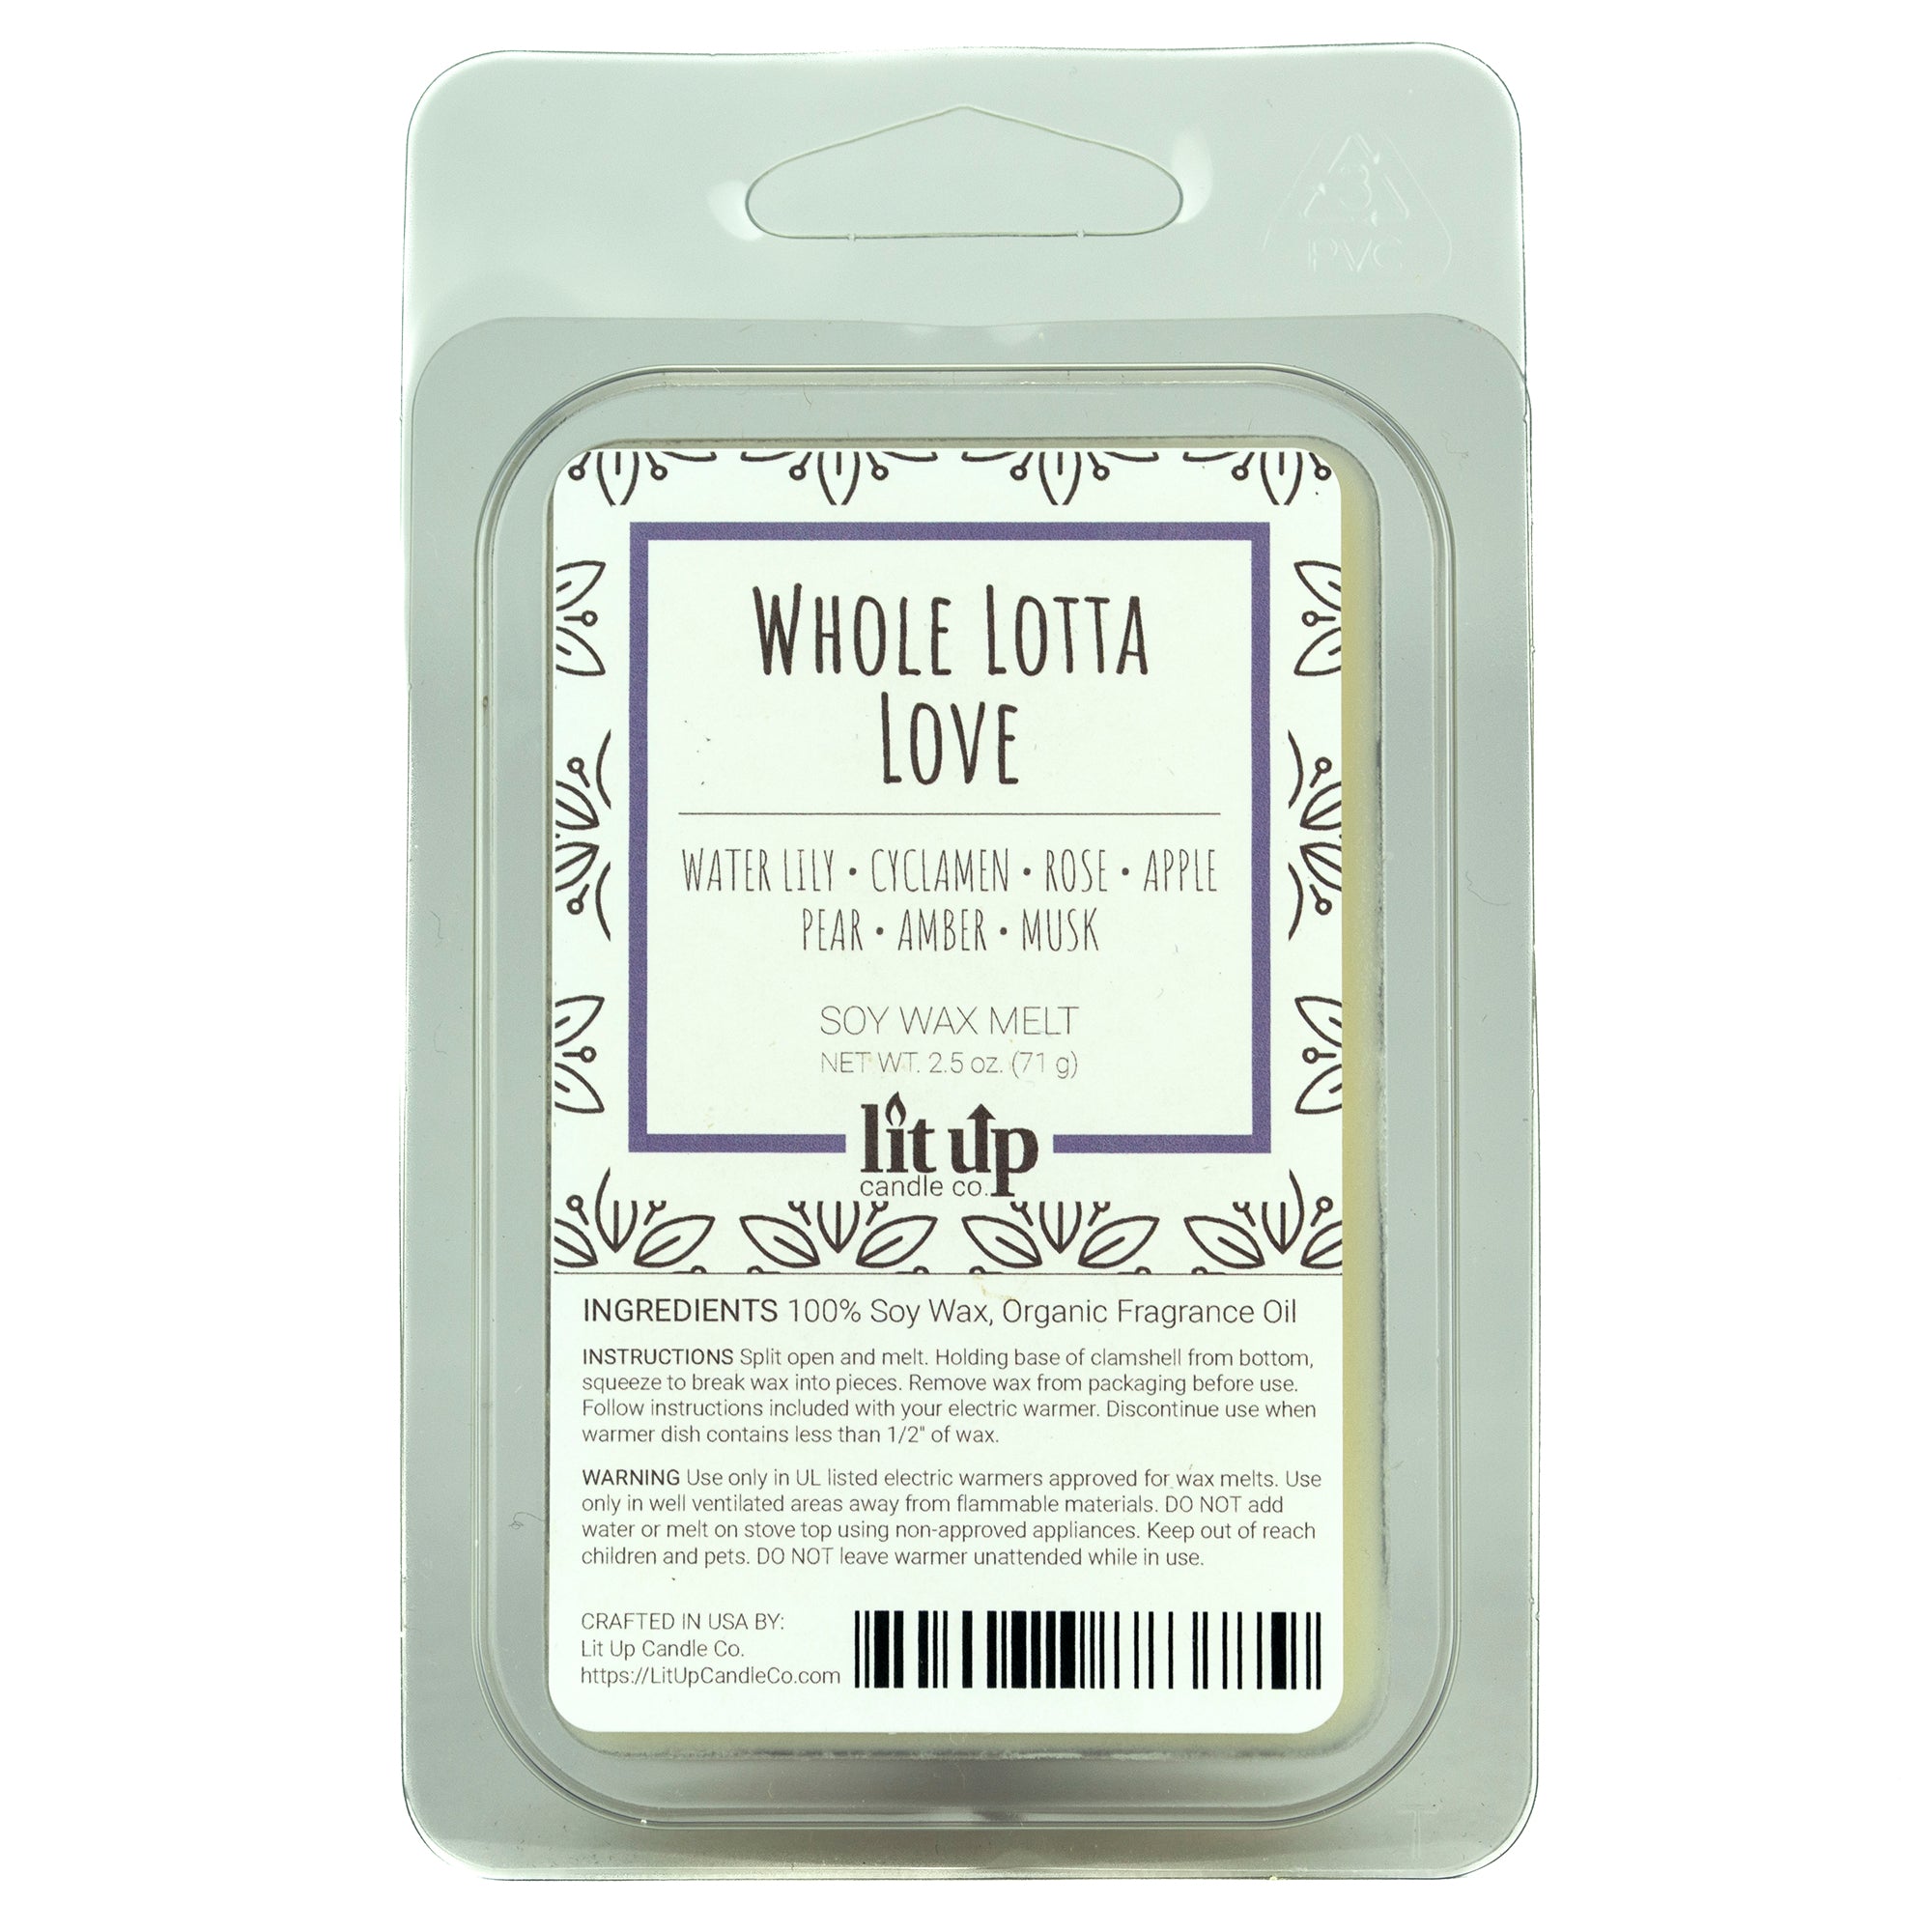 Whole Lotta Love scented 2.5 oz. soy wax melt - FKA Beautiful Day